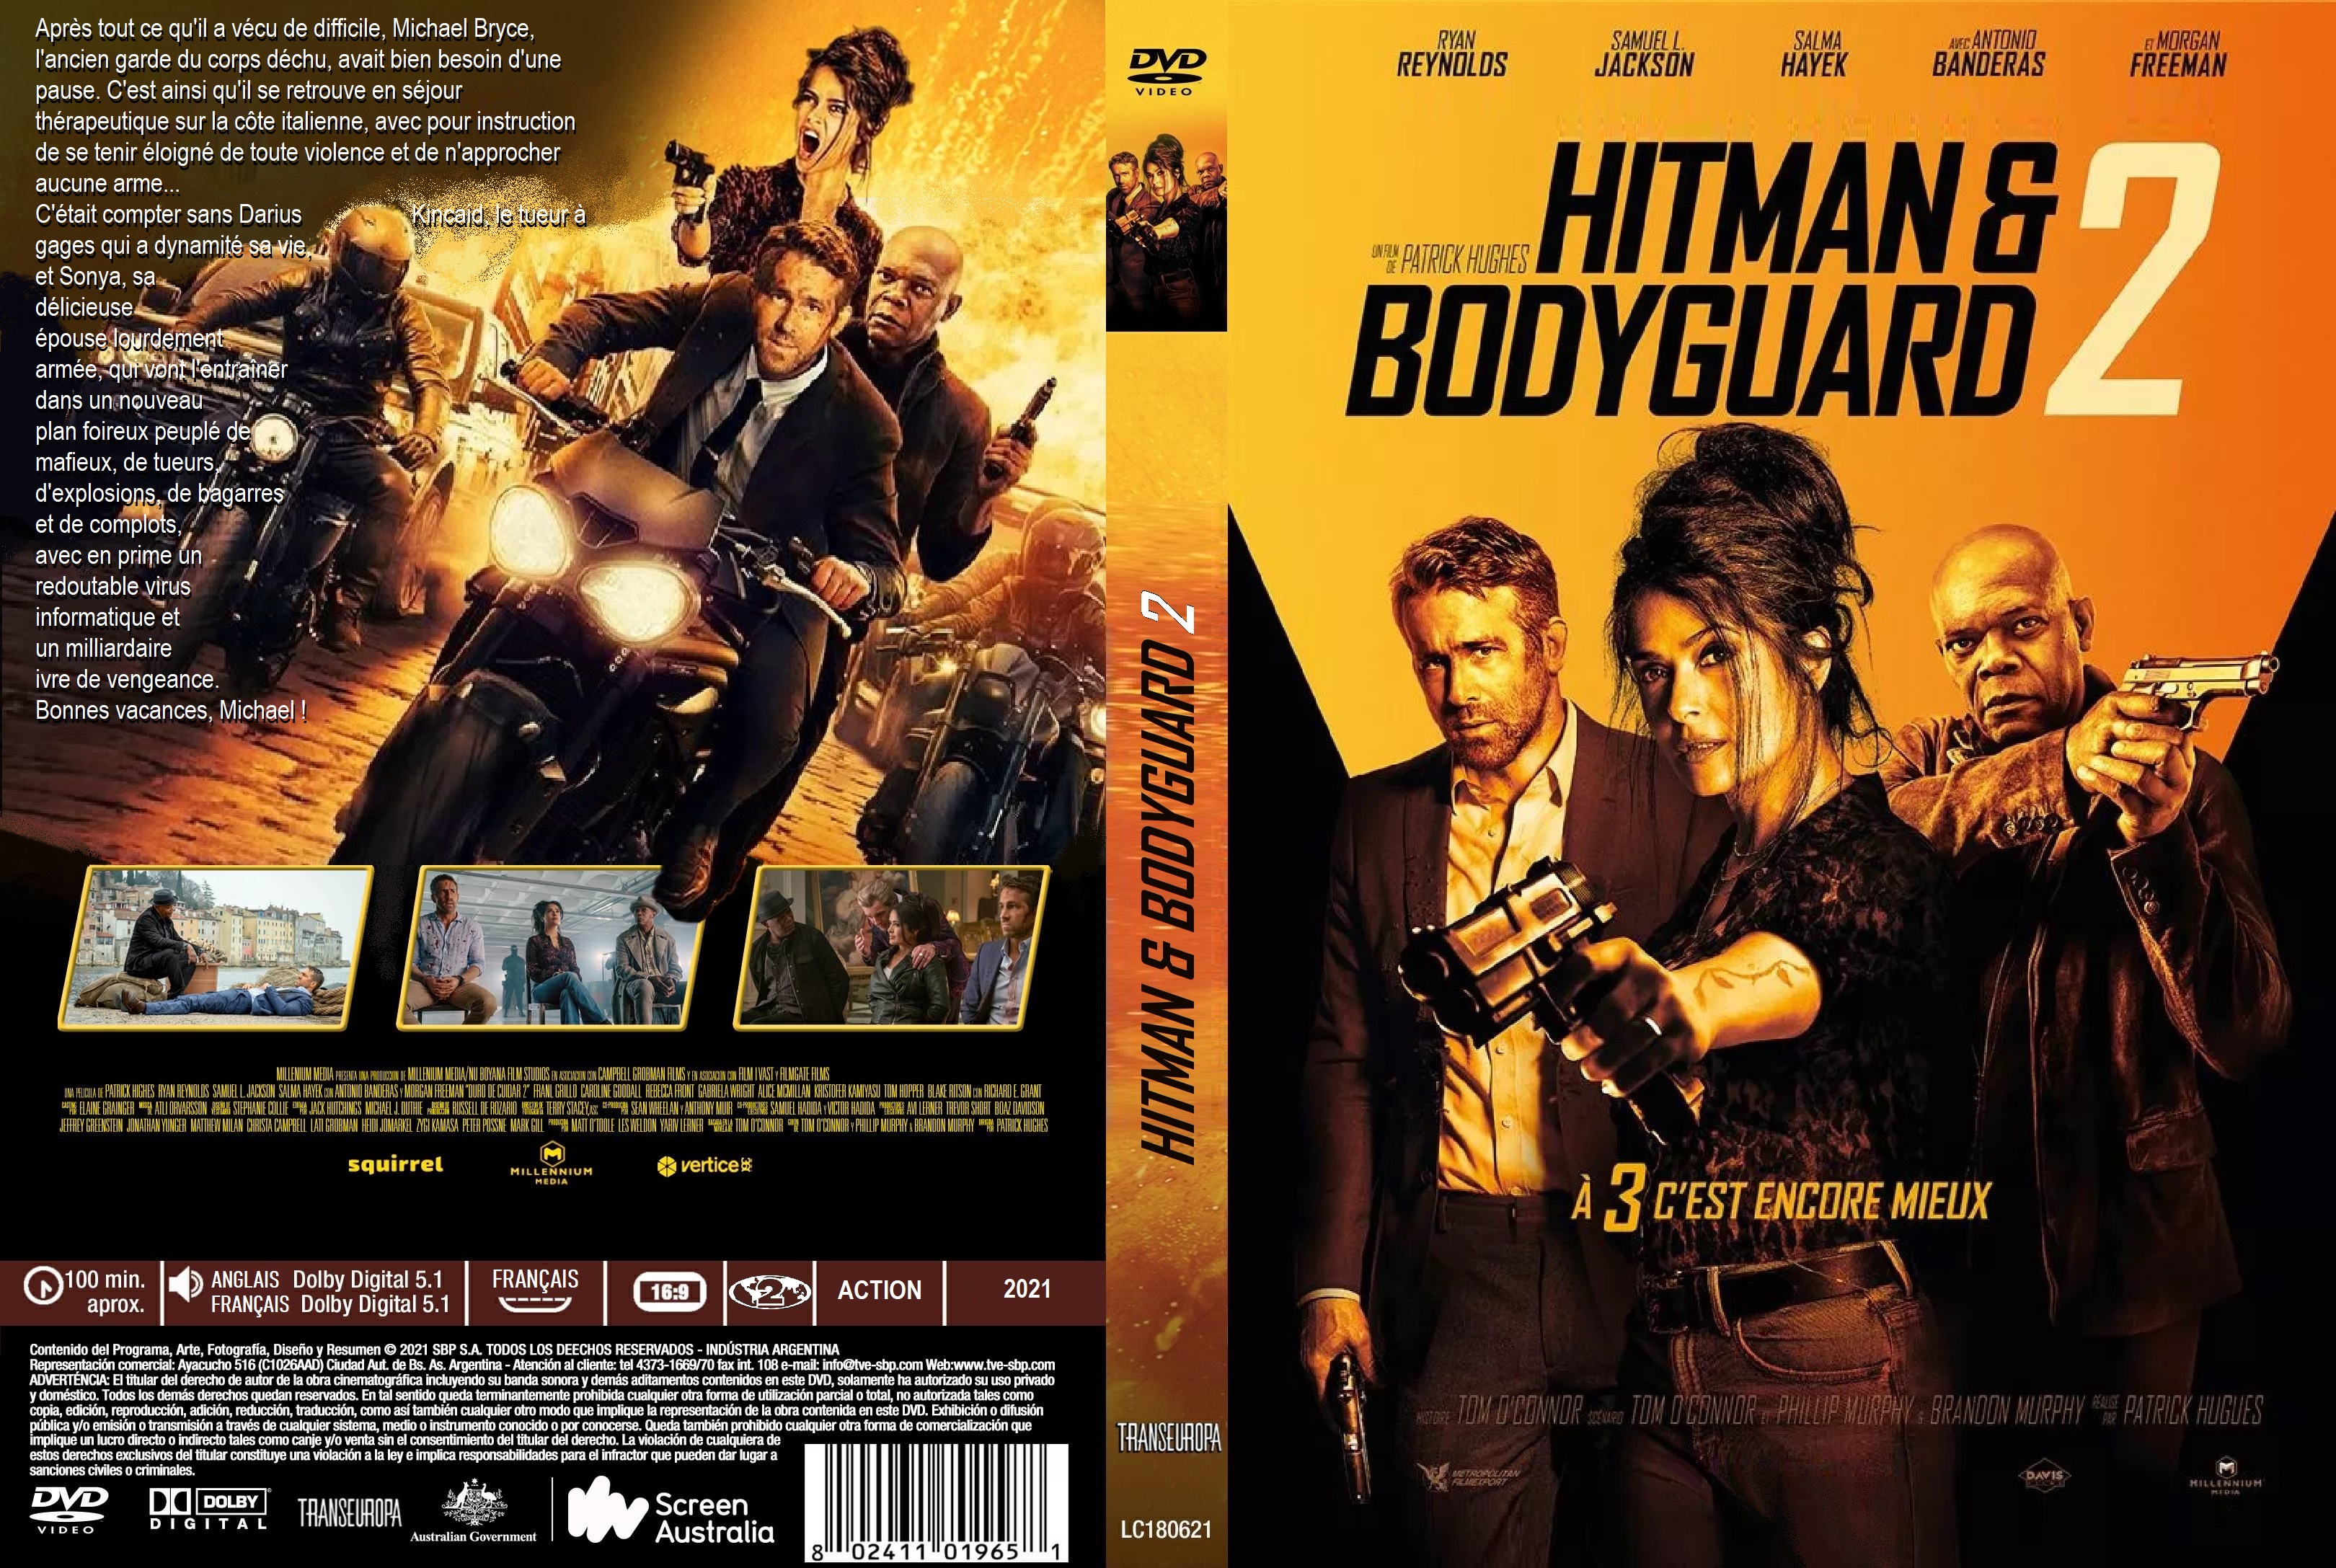 Jaquette DVD Hitman & Bodyguard 2 custom